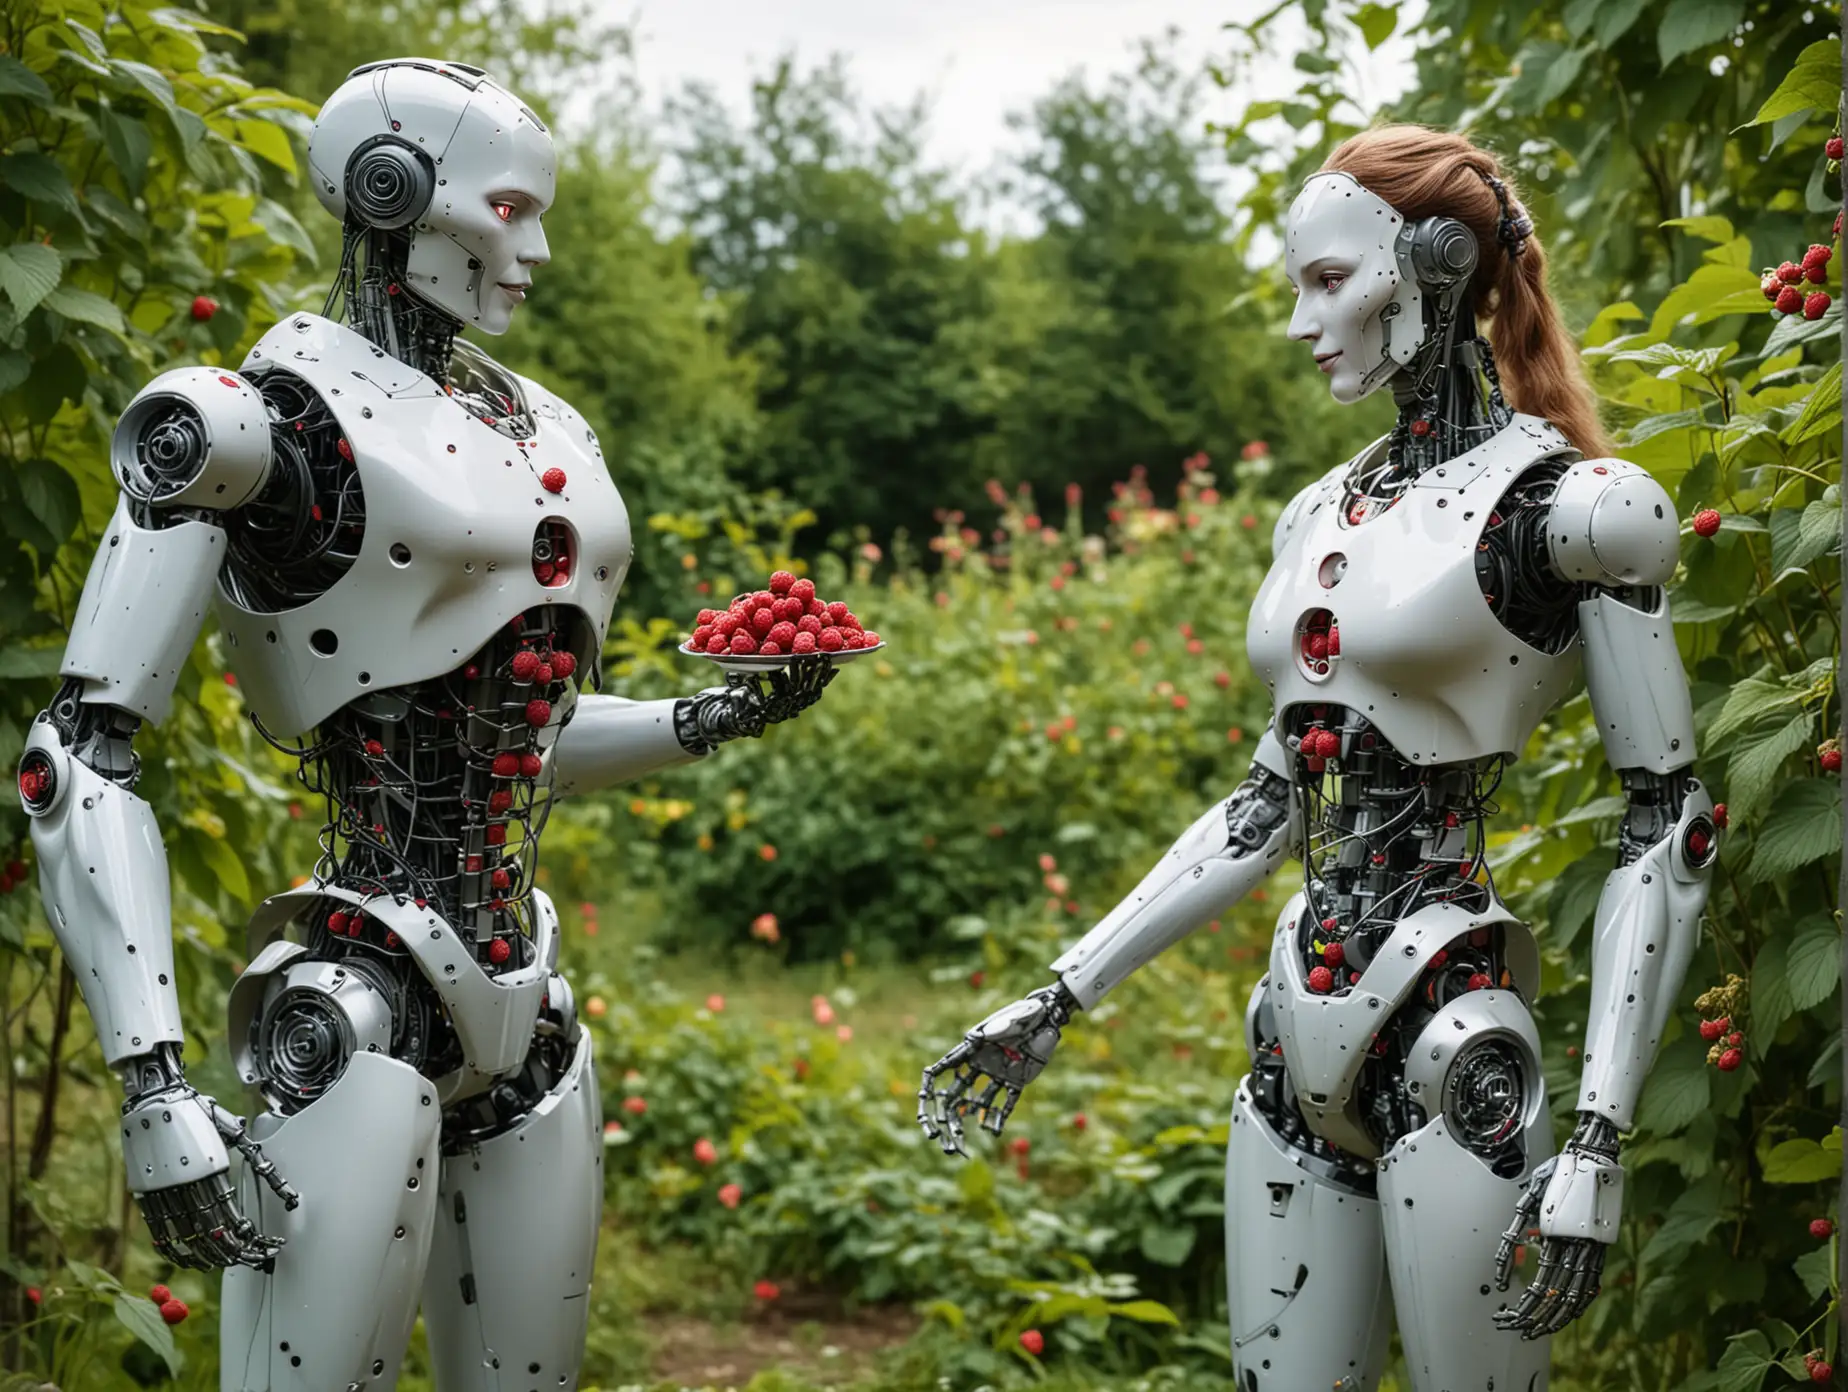 Robotic-Harvesting-Gathering-Raspberries-in-a-Futuristic-Garden